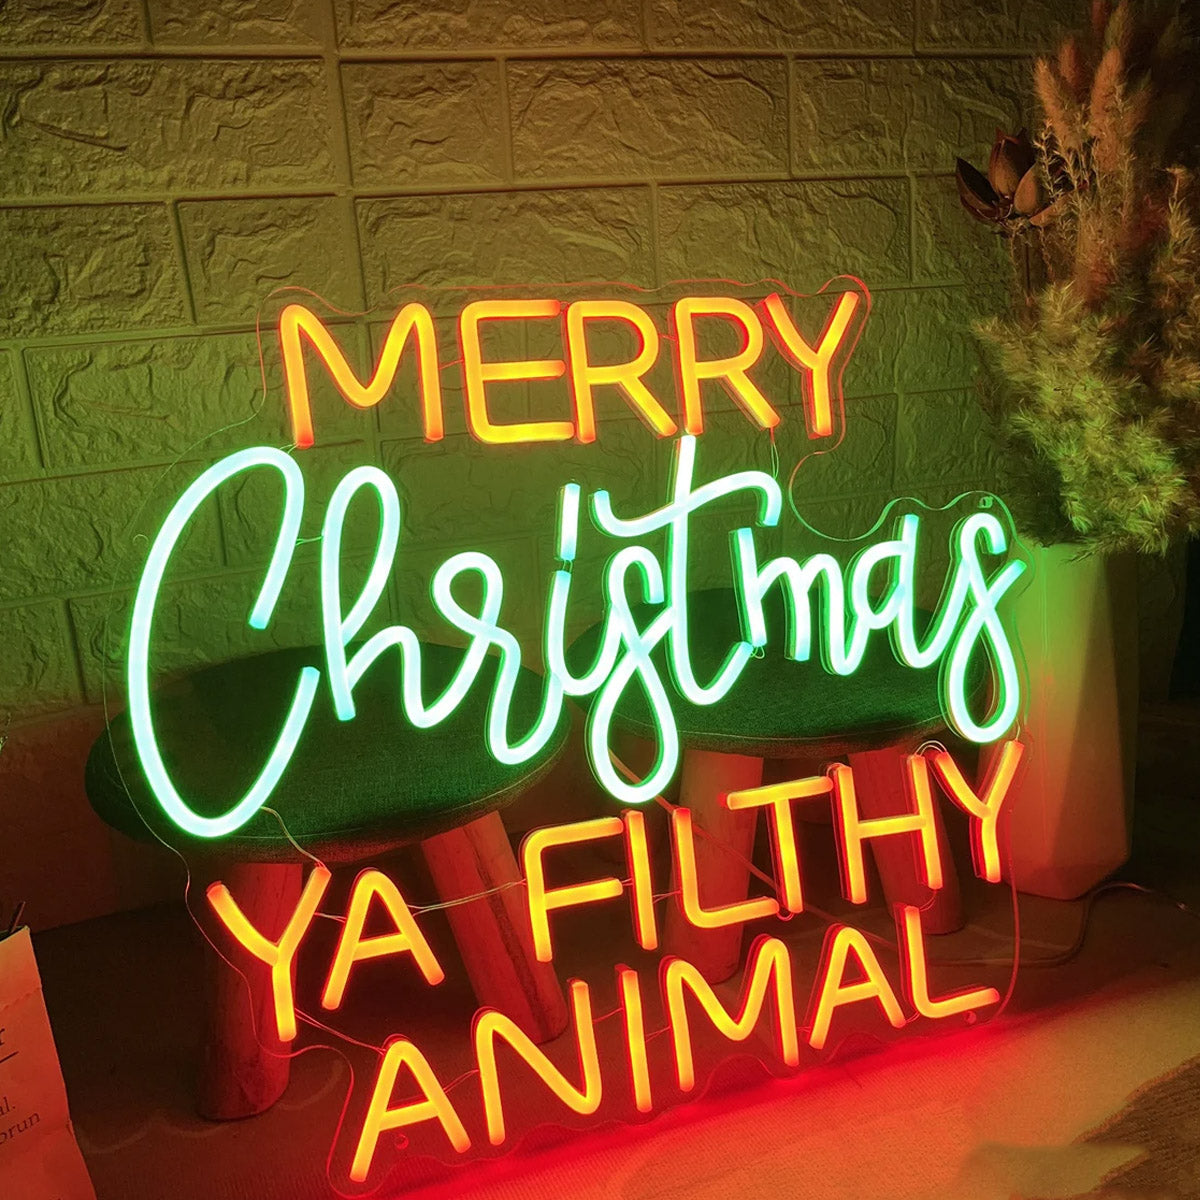 NEONIP-100% Handmade Ya Filthy Animal Merry Christmas Neon Sign Christmas Decorations